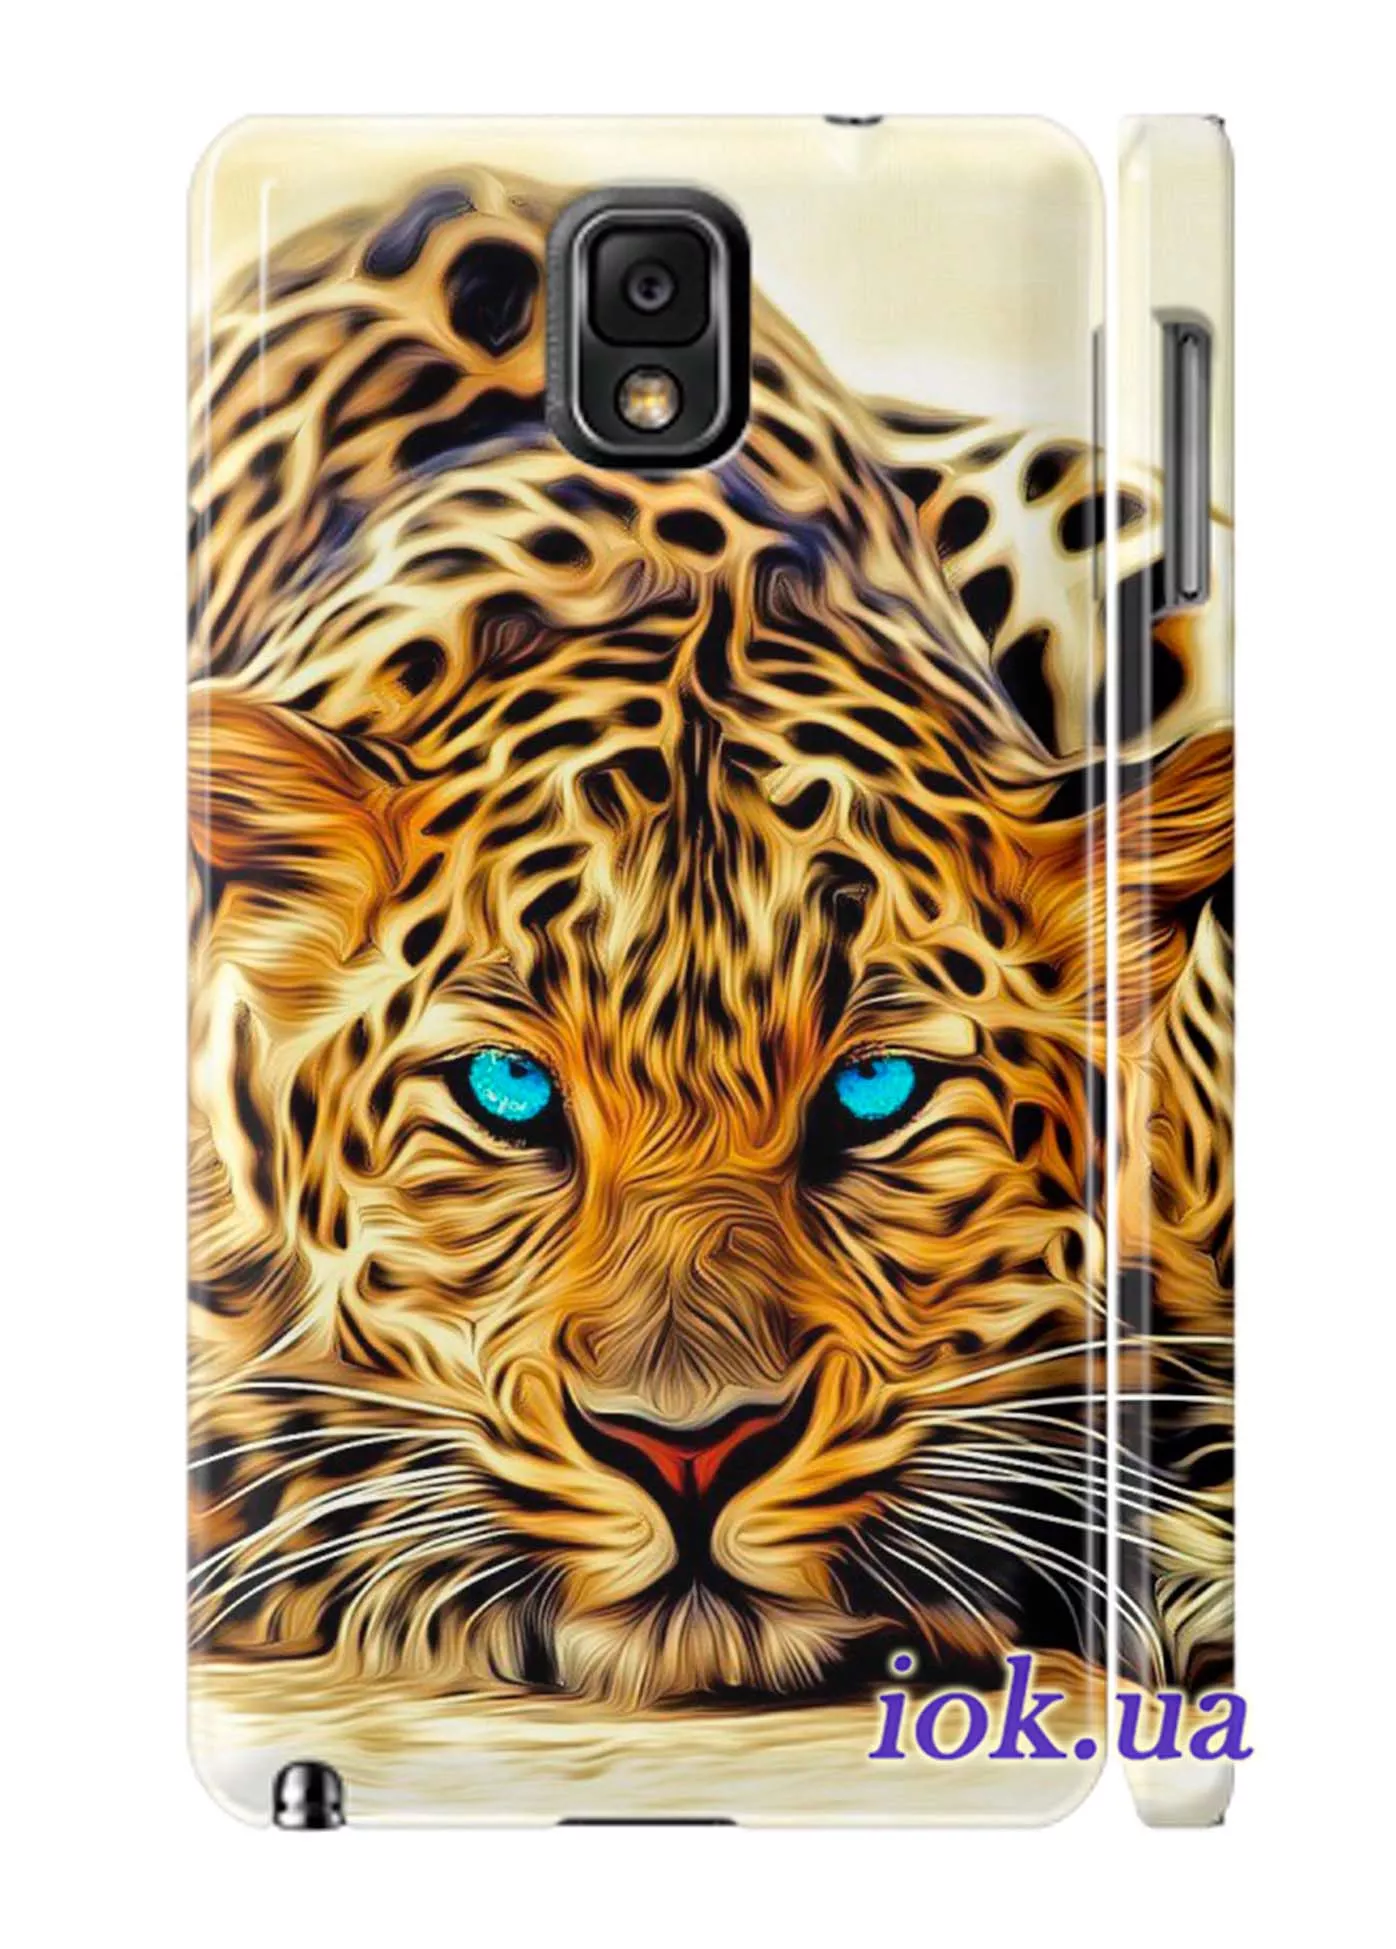 Чехол Galaxy Note 3 - Леопард